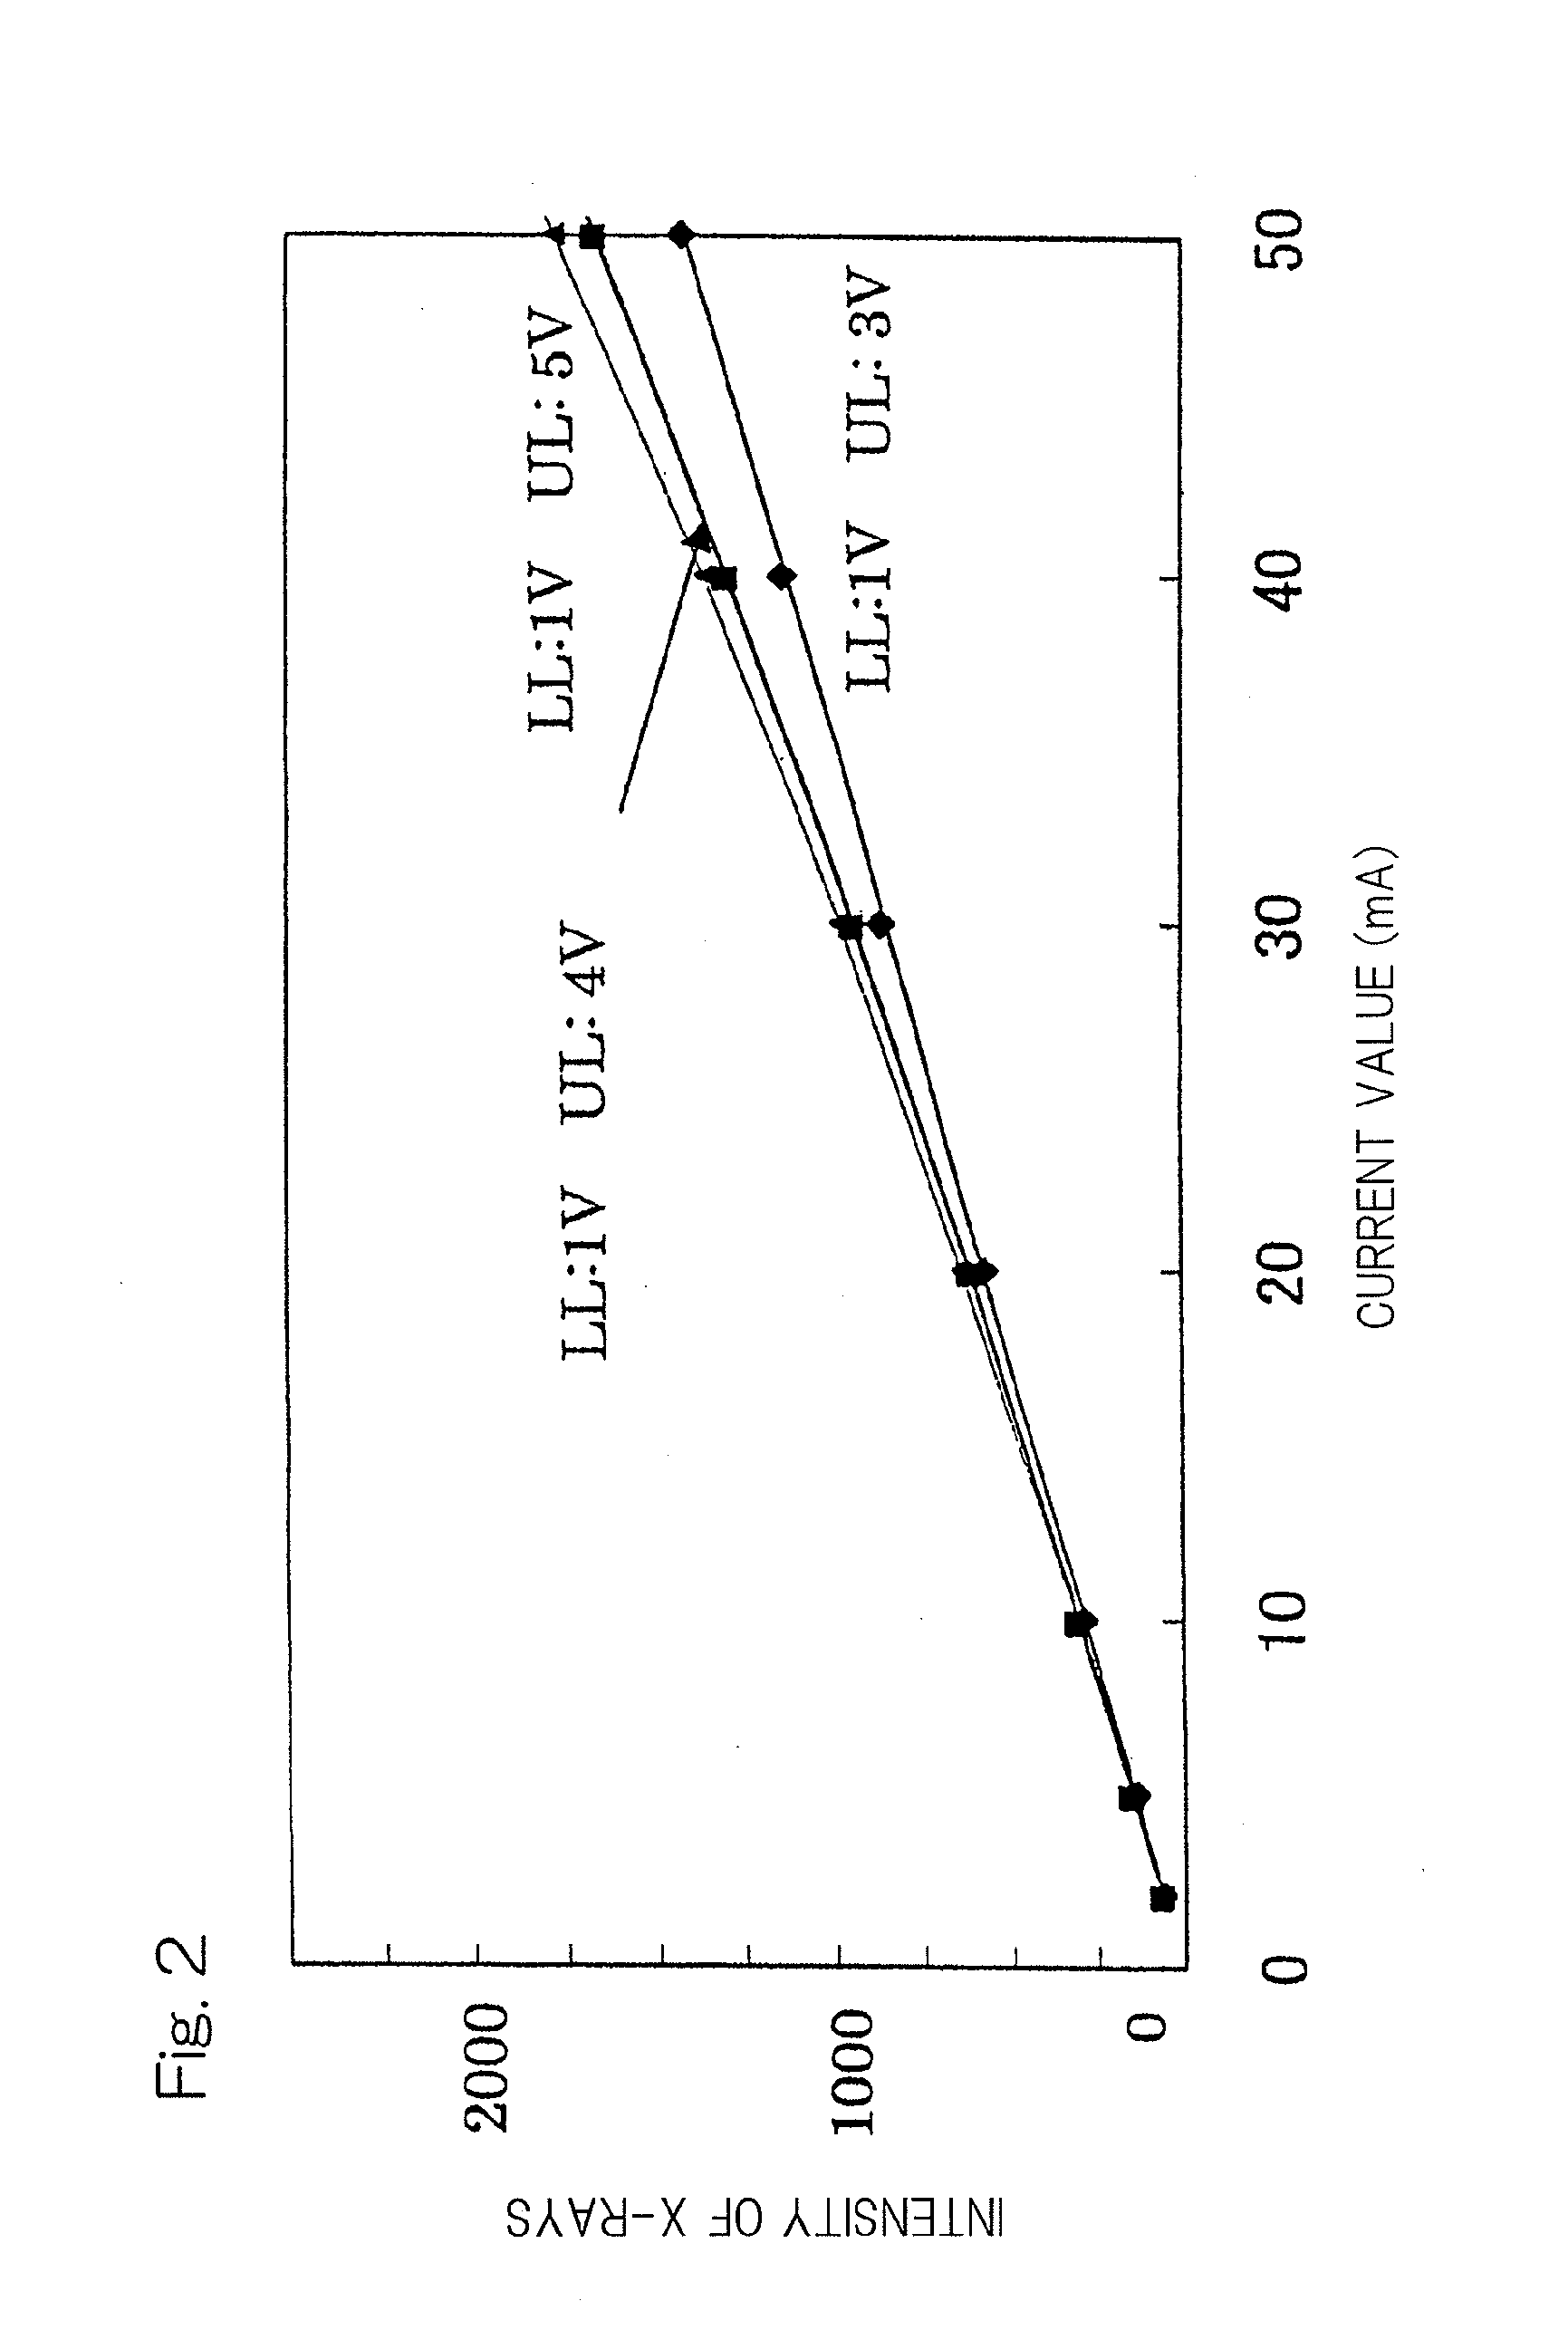 Wavelength dispersive x-ray fluorescence spectrometer